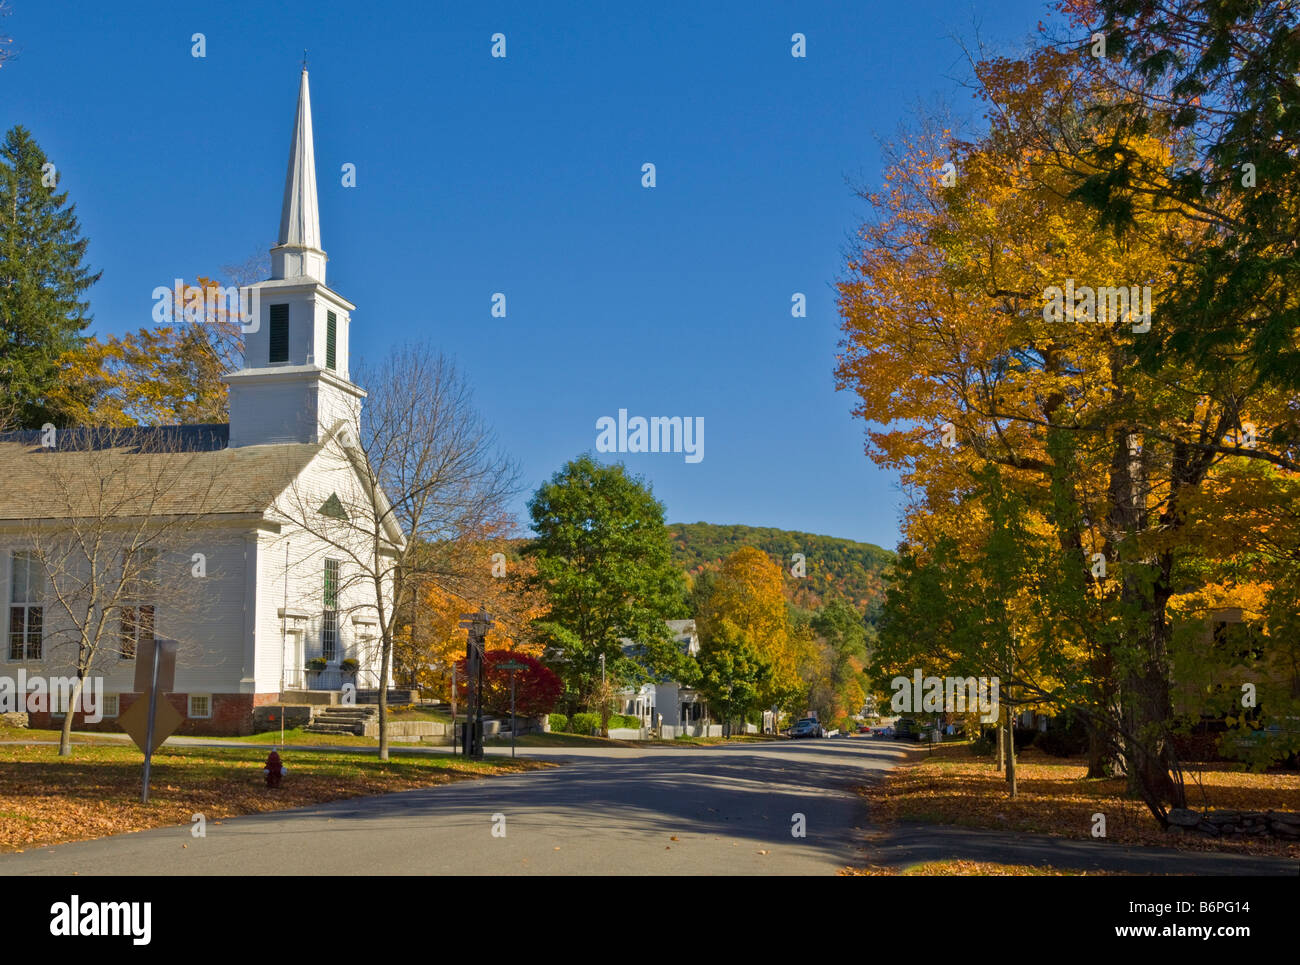 Otoño colores de otoño alrededor de madera blanca tradicional iglesia clapperboard Grafton Vermont ESTADOS UNIDOS Estados Unidos de América Foto de stock